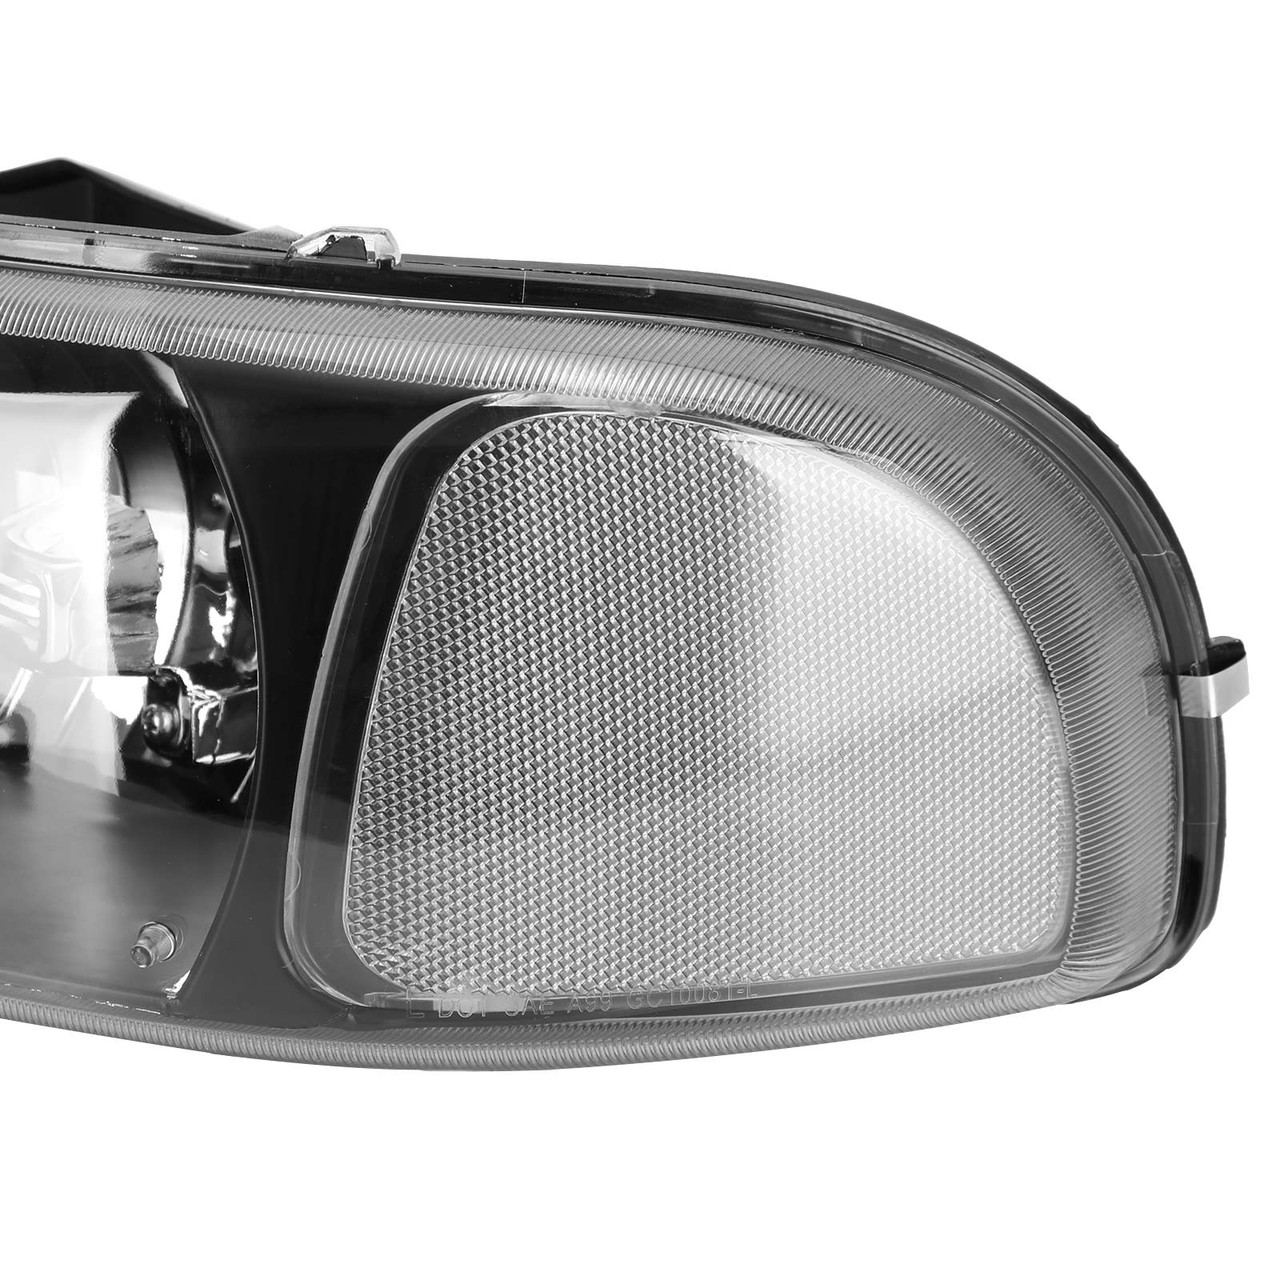 Black Housing Clear Side Headlights/Lamp Assembly For GMC Sierra Yukon XL 99-06